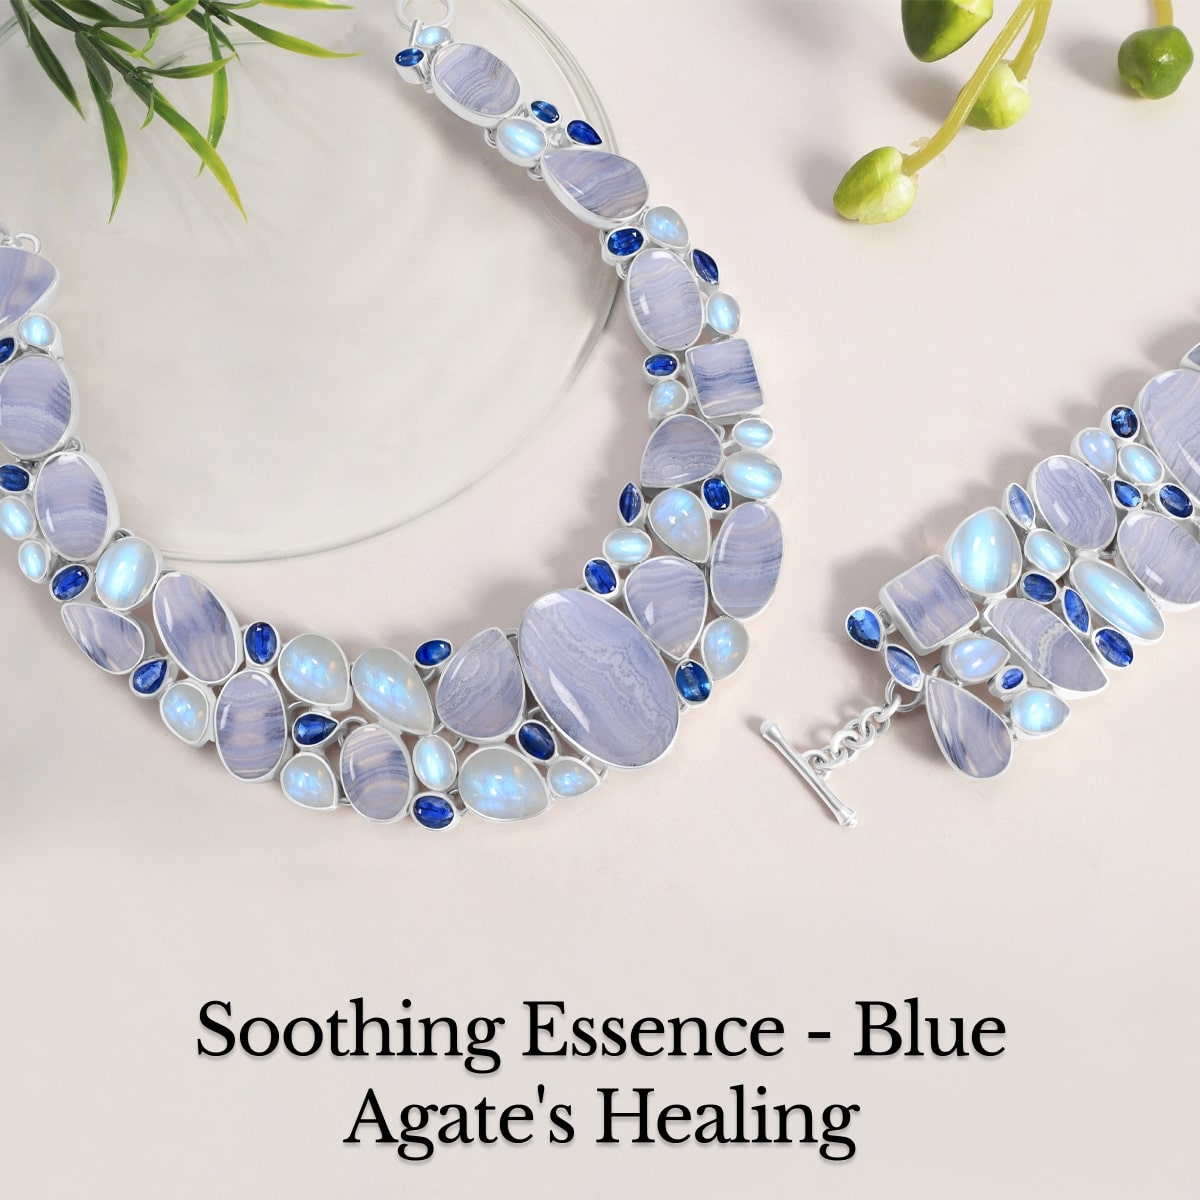 Healing properties of blue agate